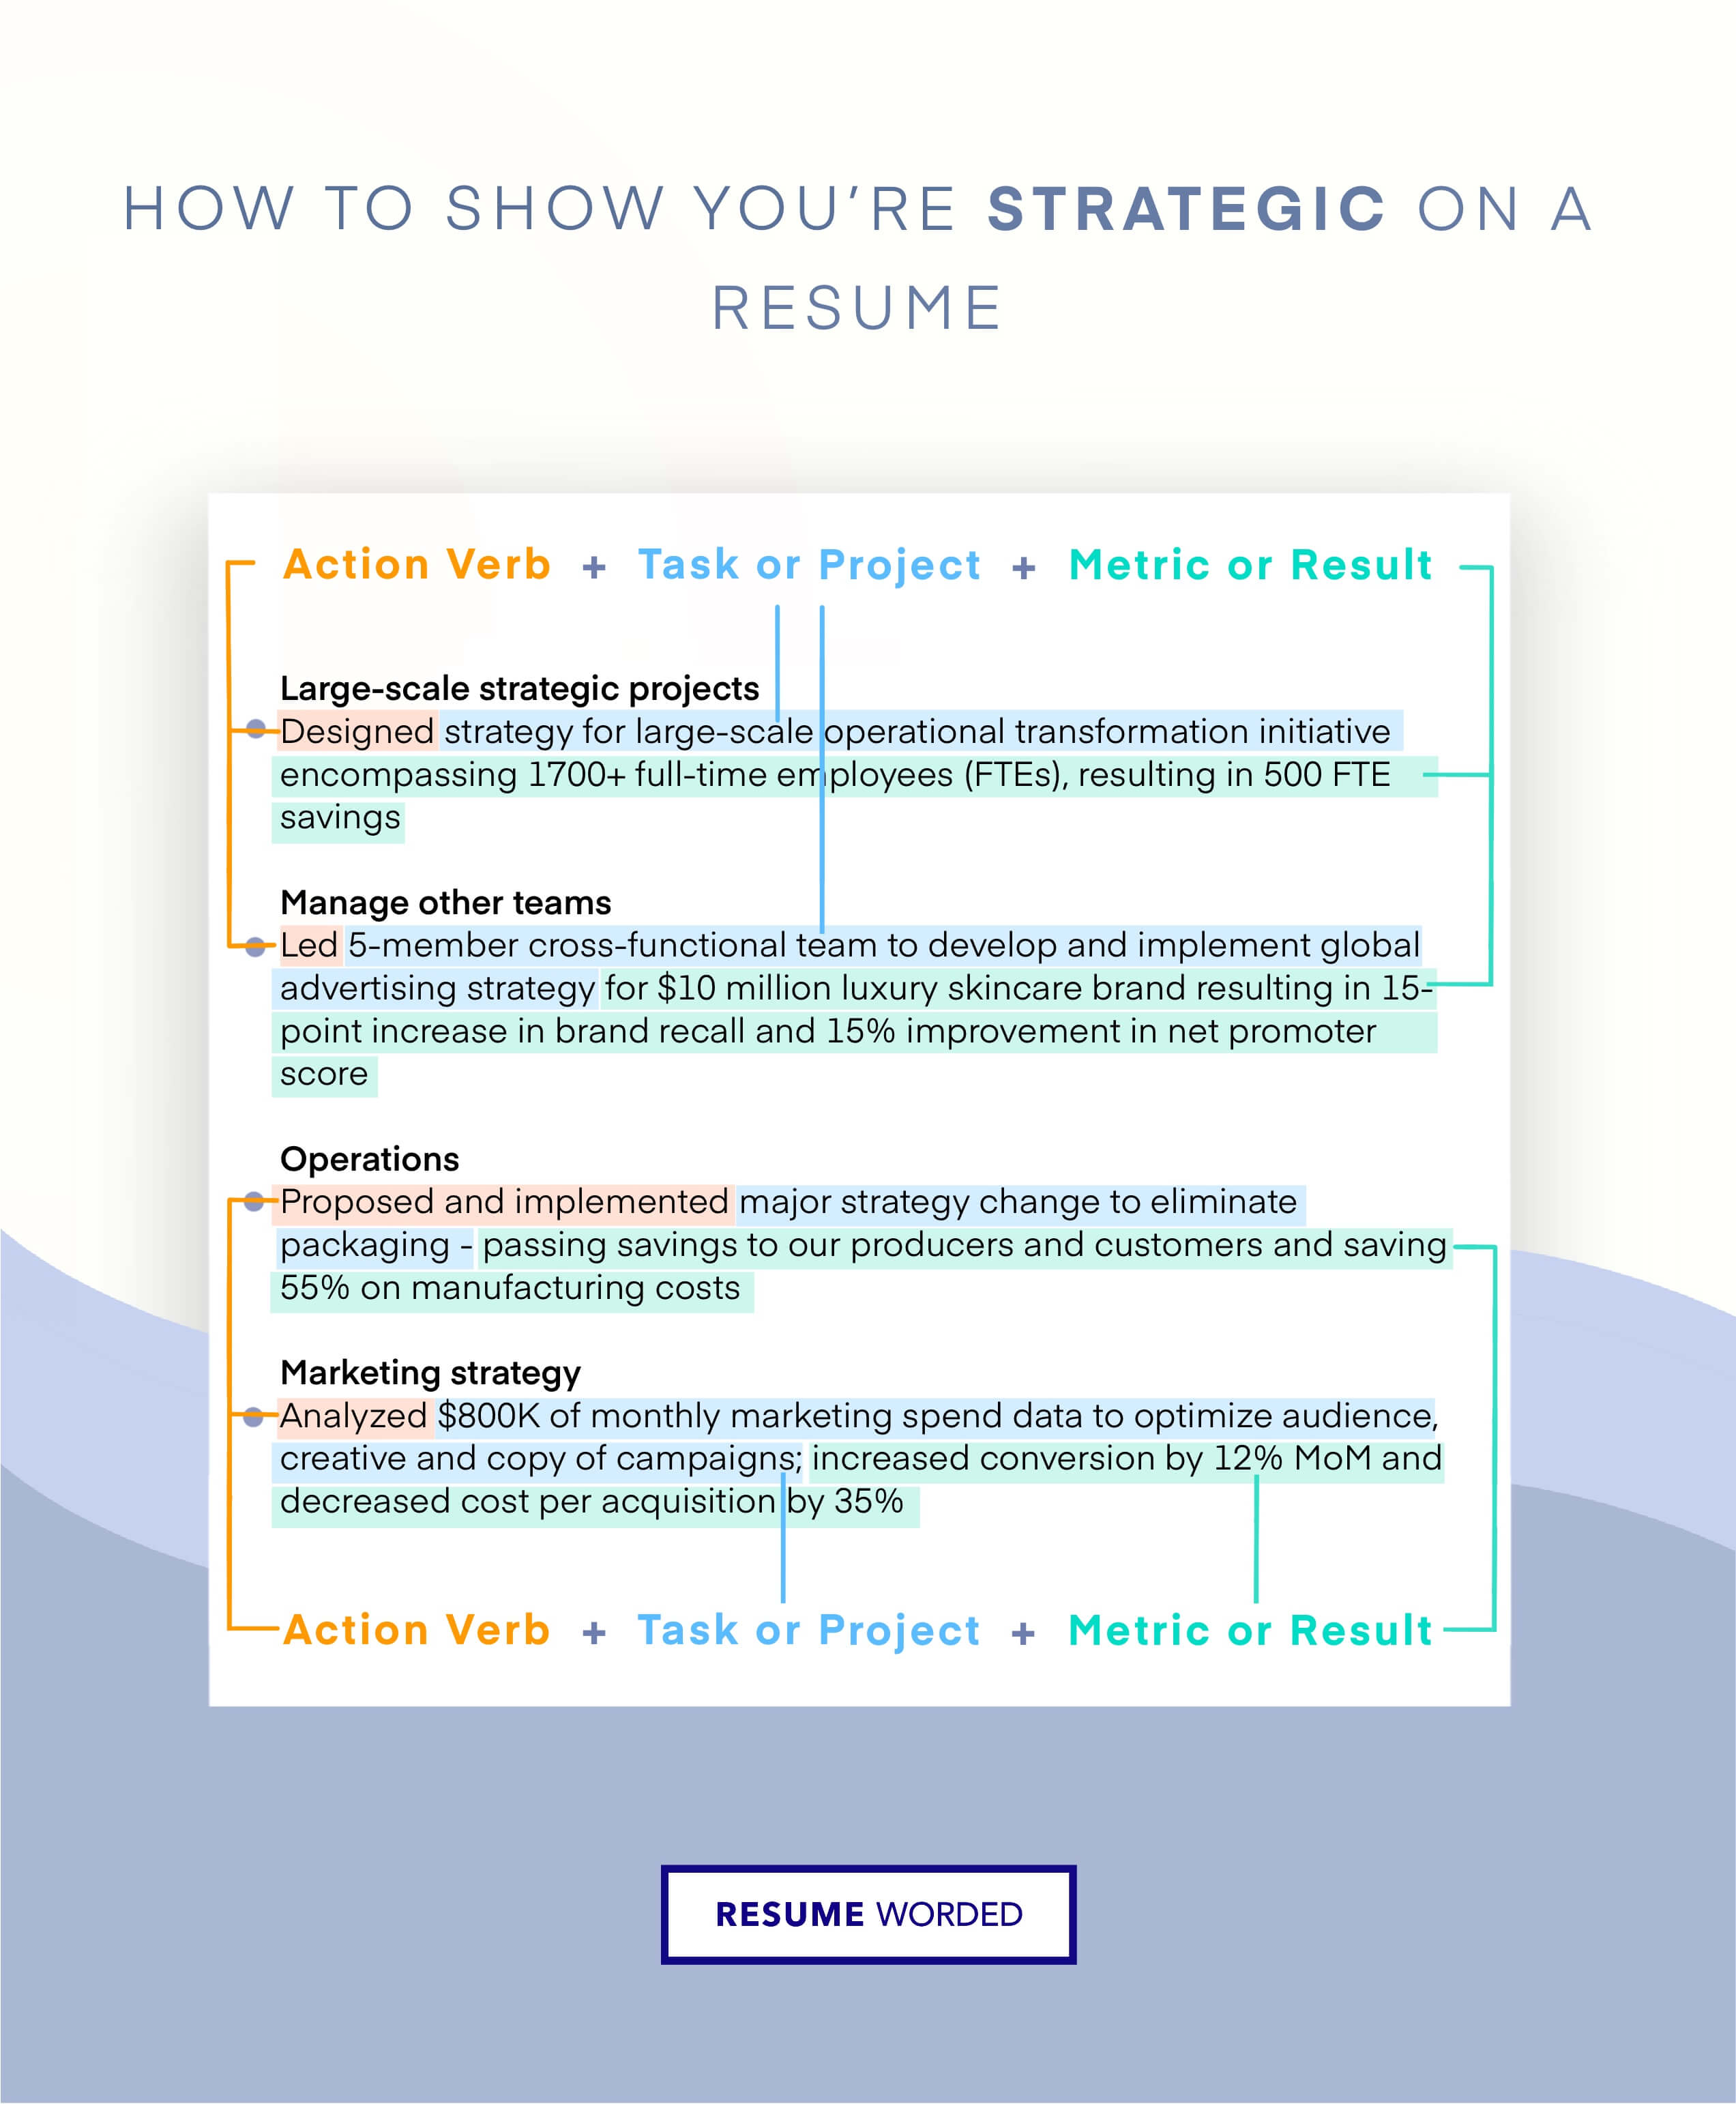 Demonstrate strategic leadership in risk management - Chief Actuarial/Risk Officer CV